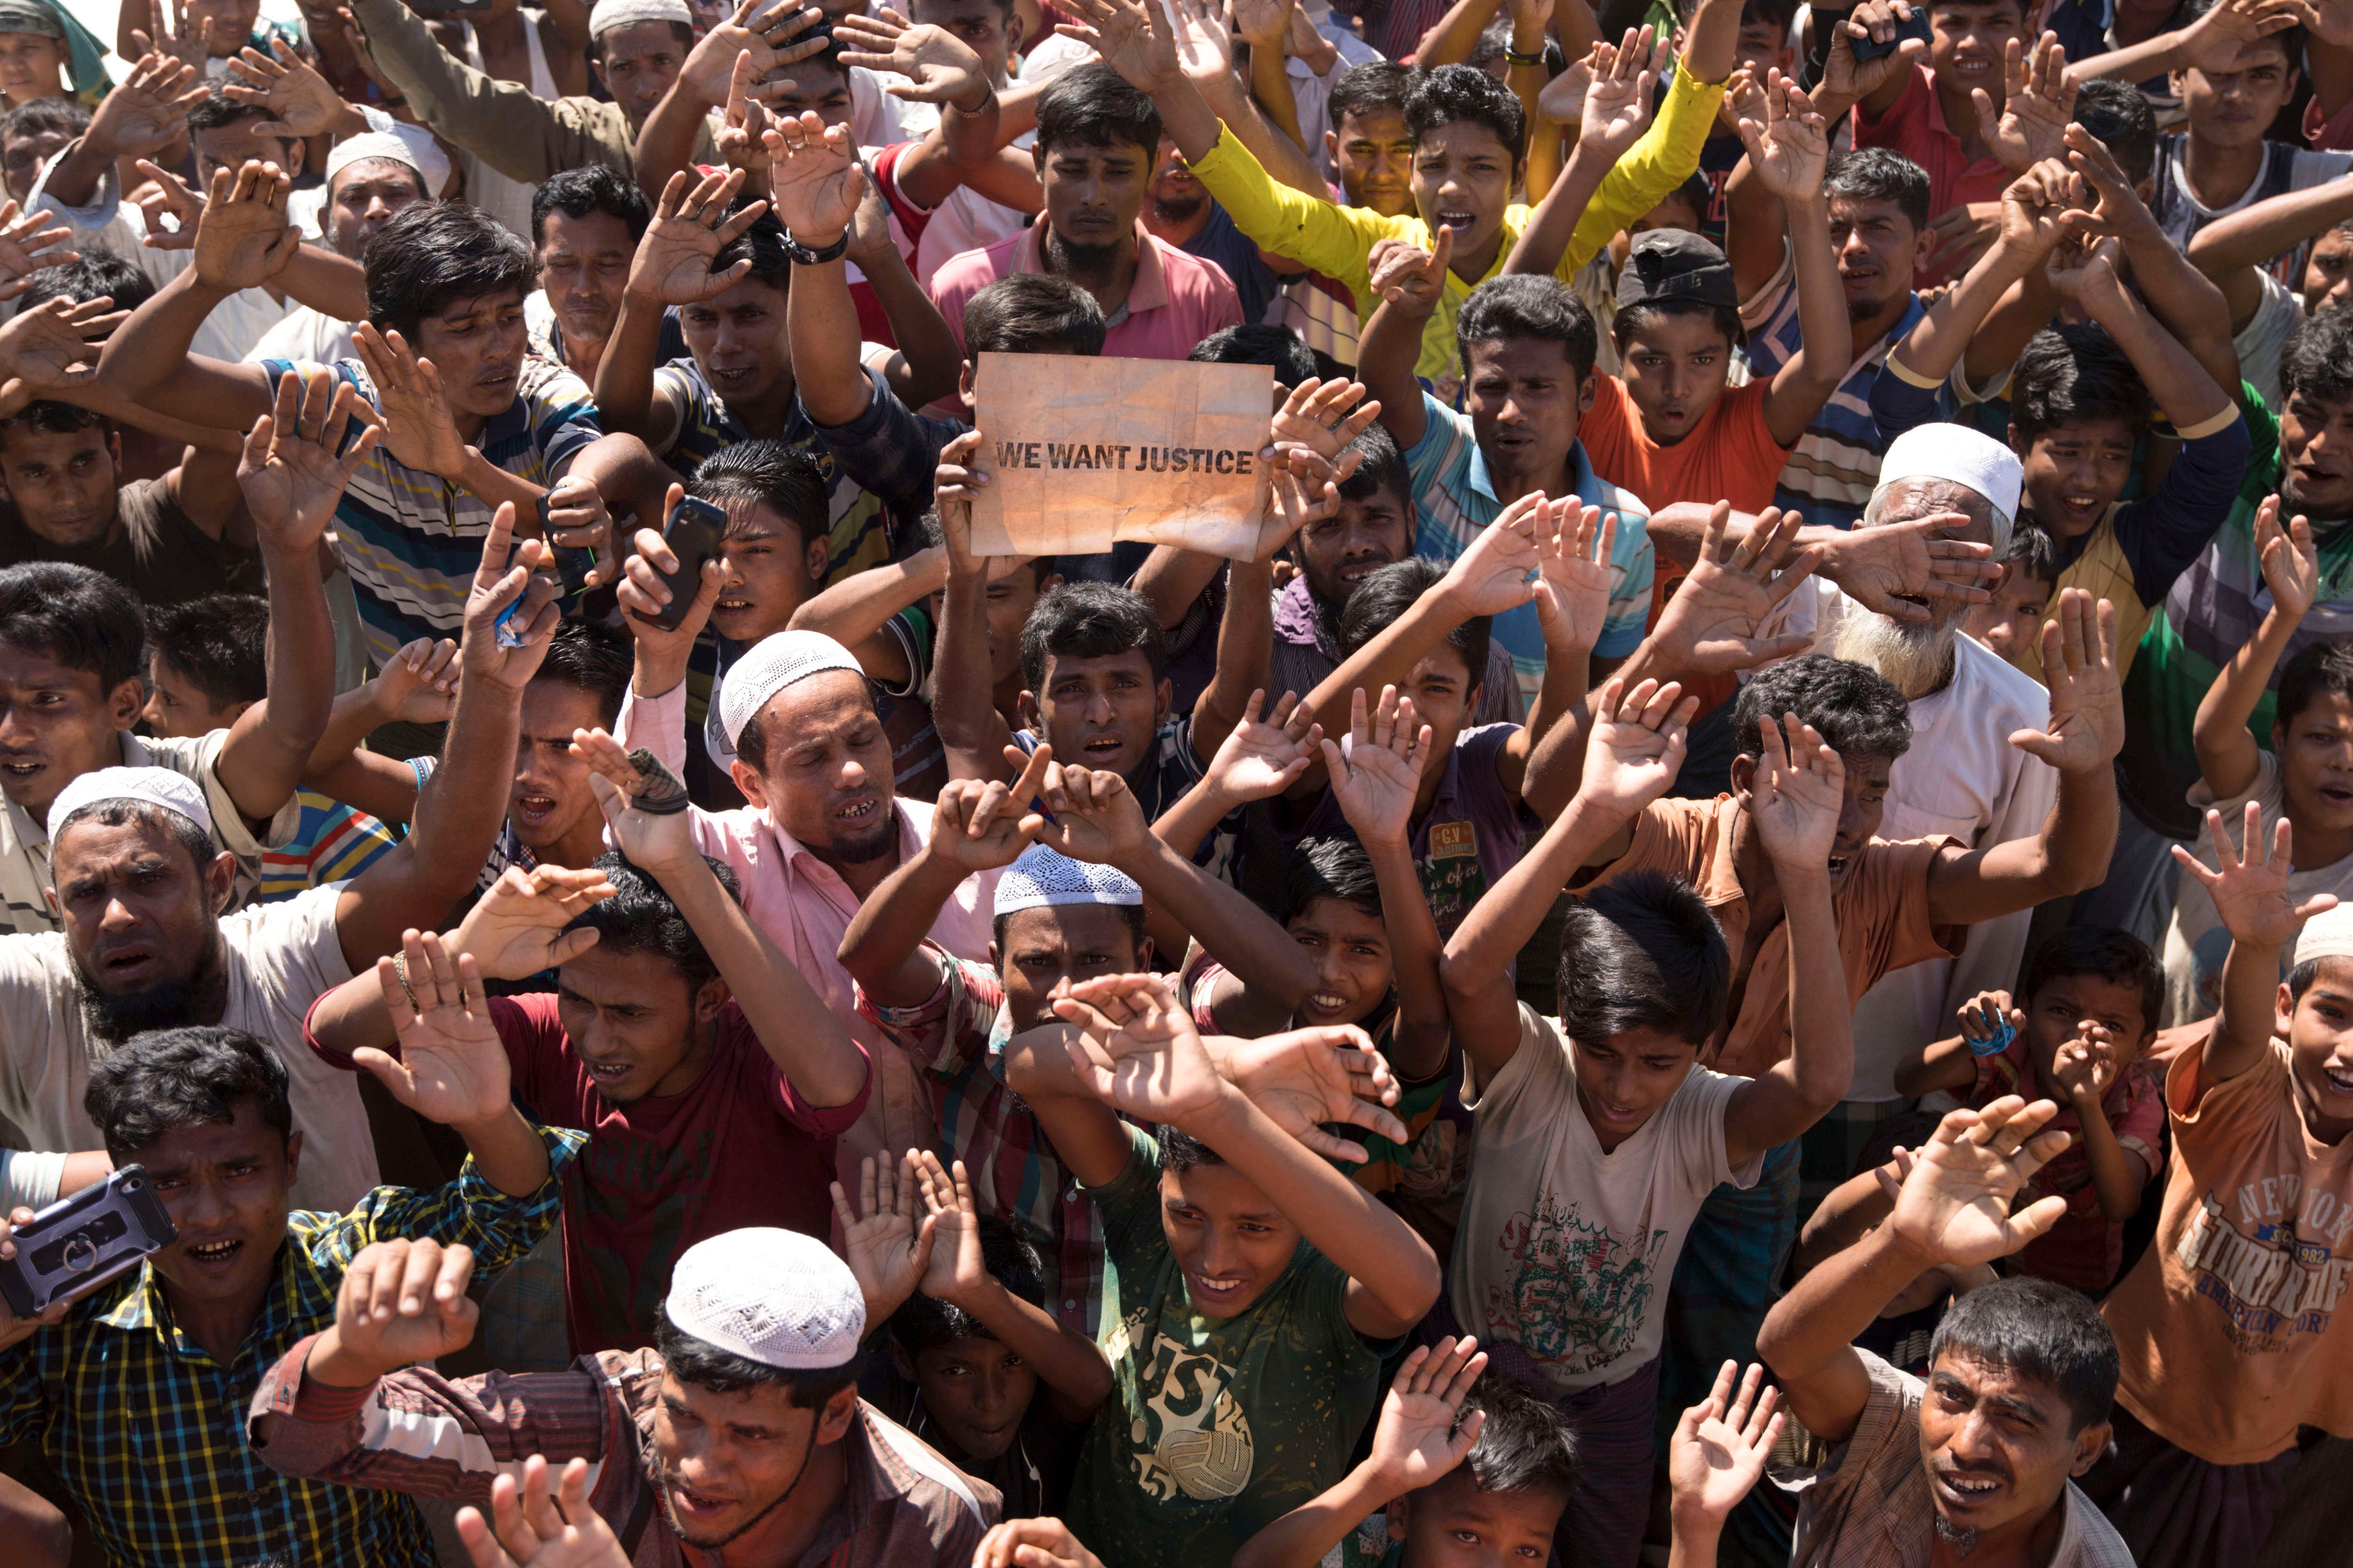 Rohingya demonstrators shout slogans as they protest repatriation from the Unchiprang refugee camp in Teknaf, Bangladesh on Nov. 15, 2018. (K M Asad&mdash;LightRocket/Getty Images)